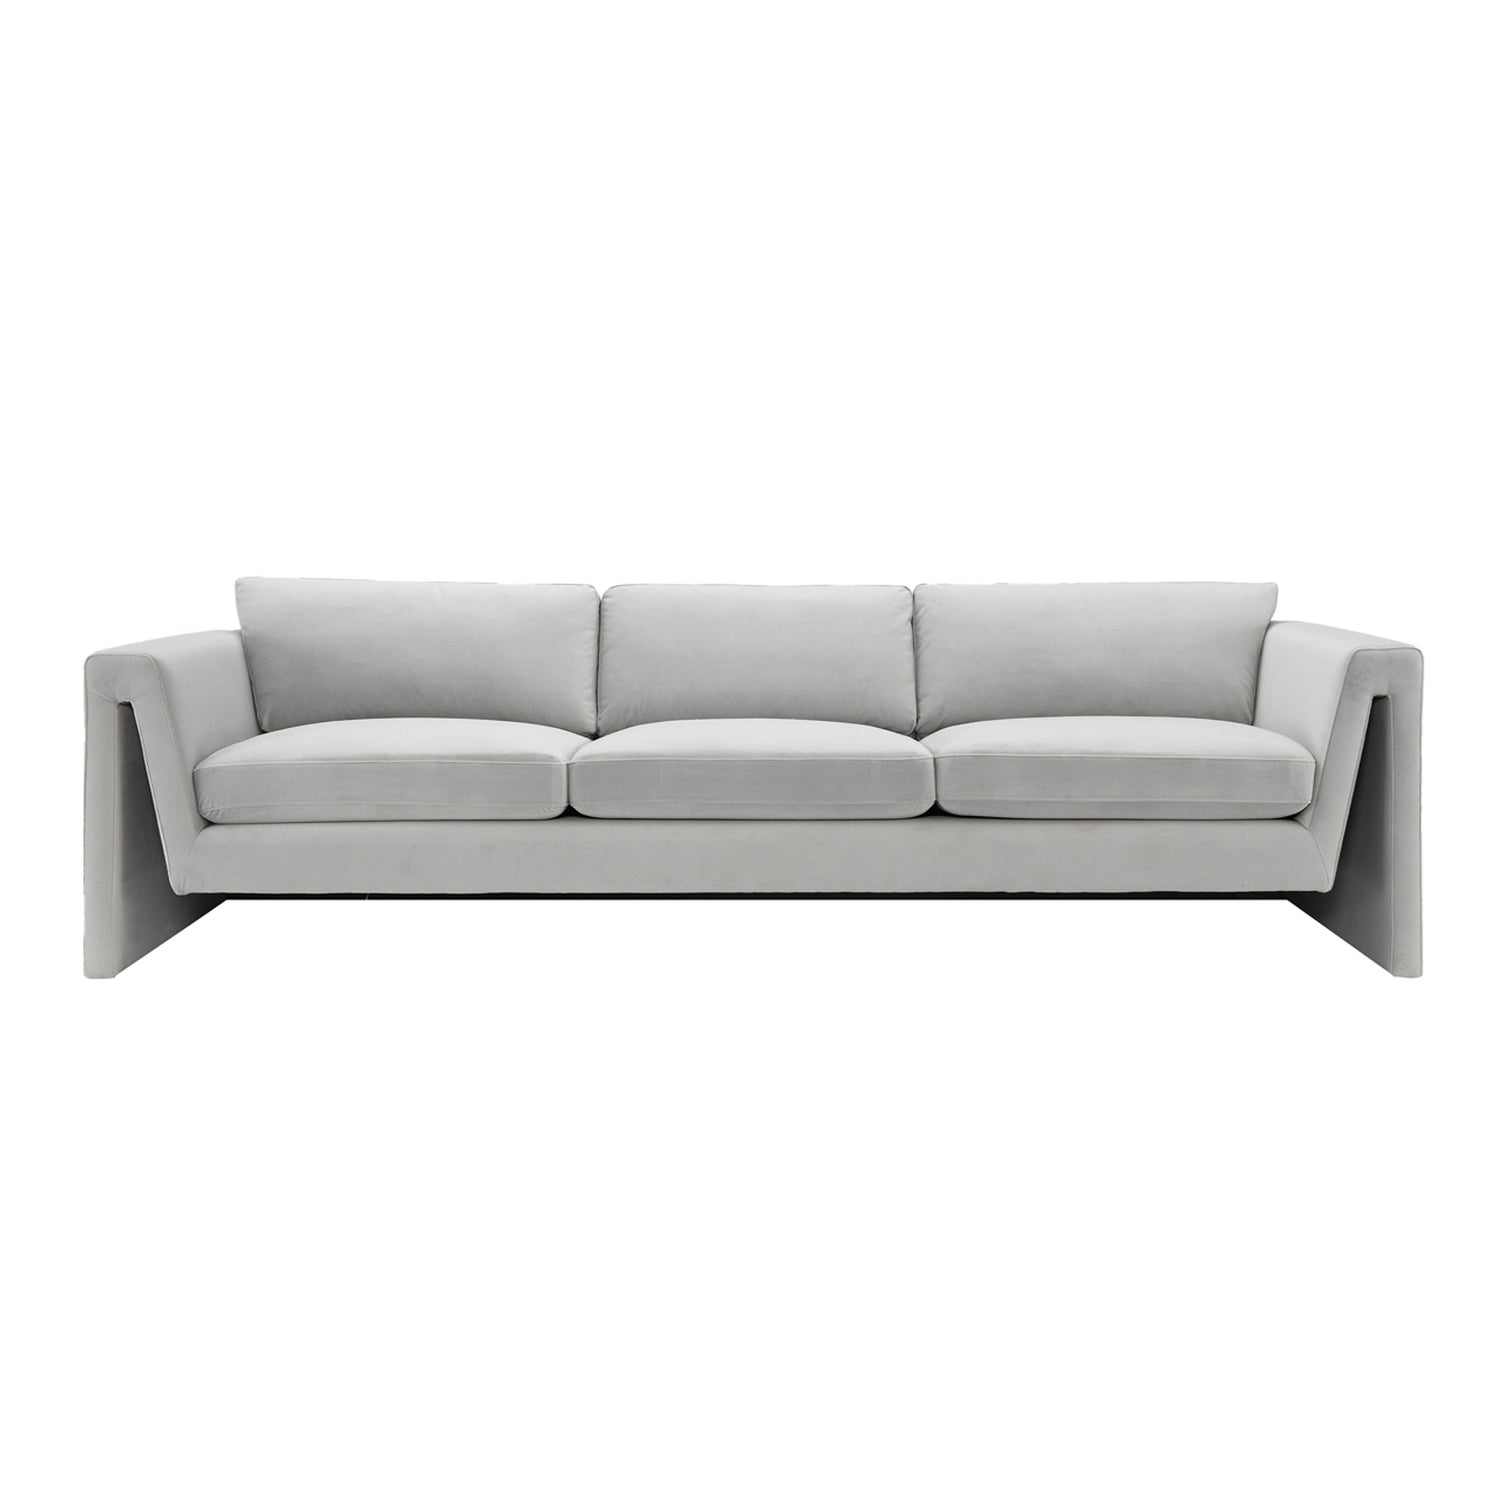 The Larsson Sofa